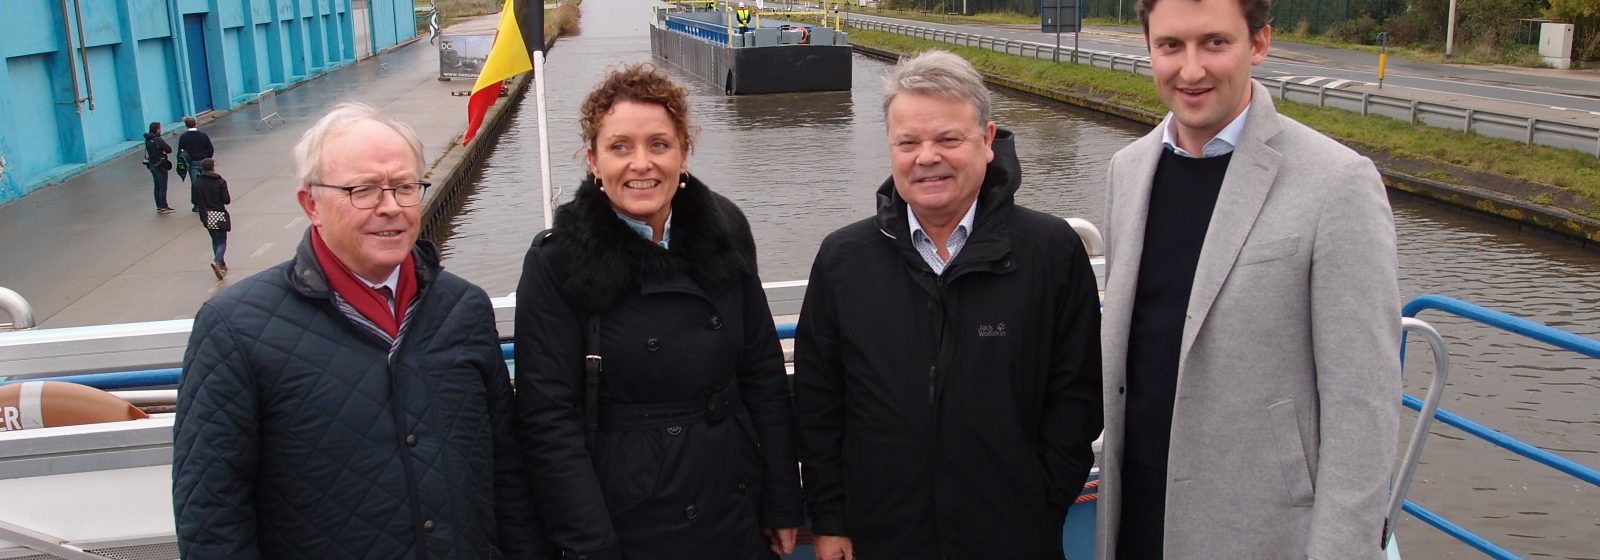 Patrick Degryse (Group De Cloedt), Lydia Peeters (Vlaamse minister), Chris Danckaerts (De Vlaamse Waterweg) en Louis-Robert Cool (Seafar) met in de achtergrond het eerste onbemande binnenvaartschip